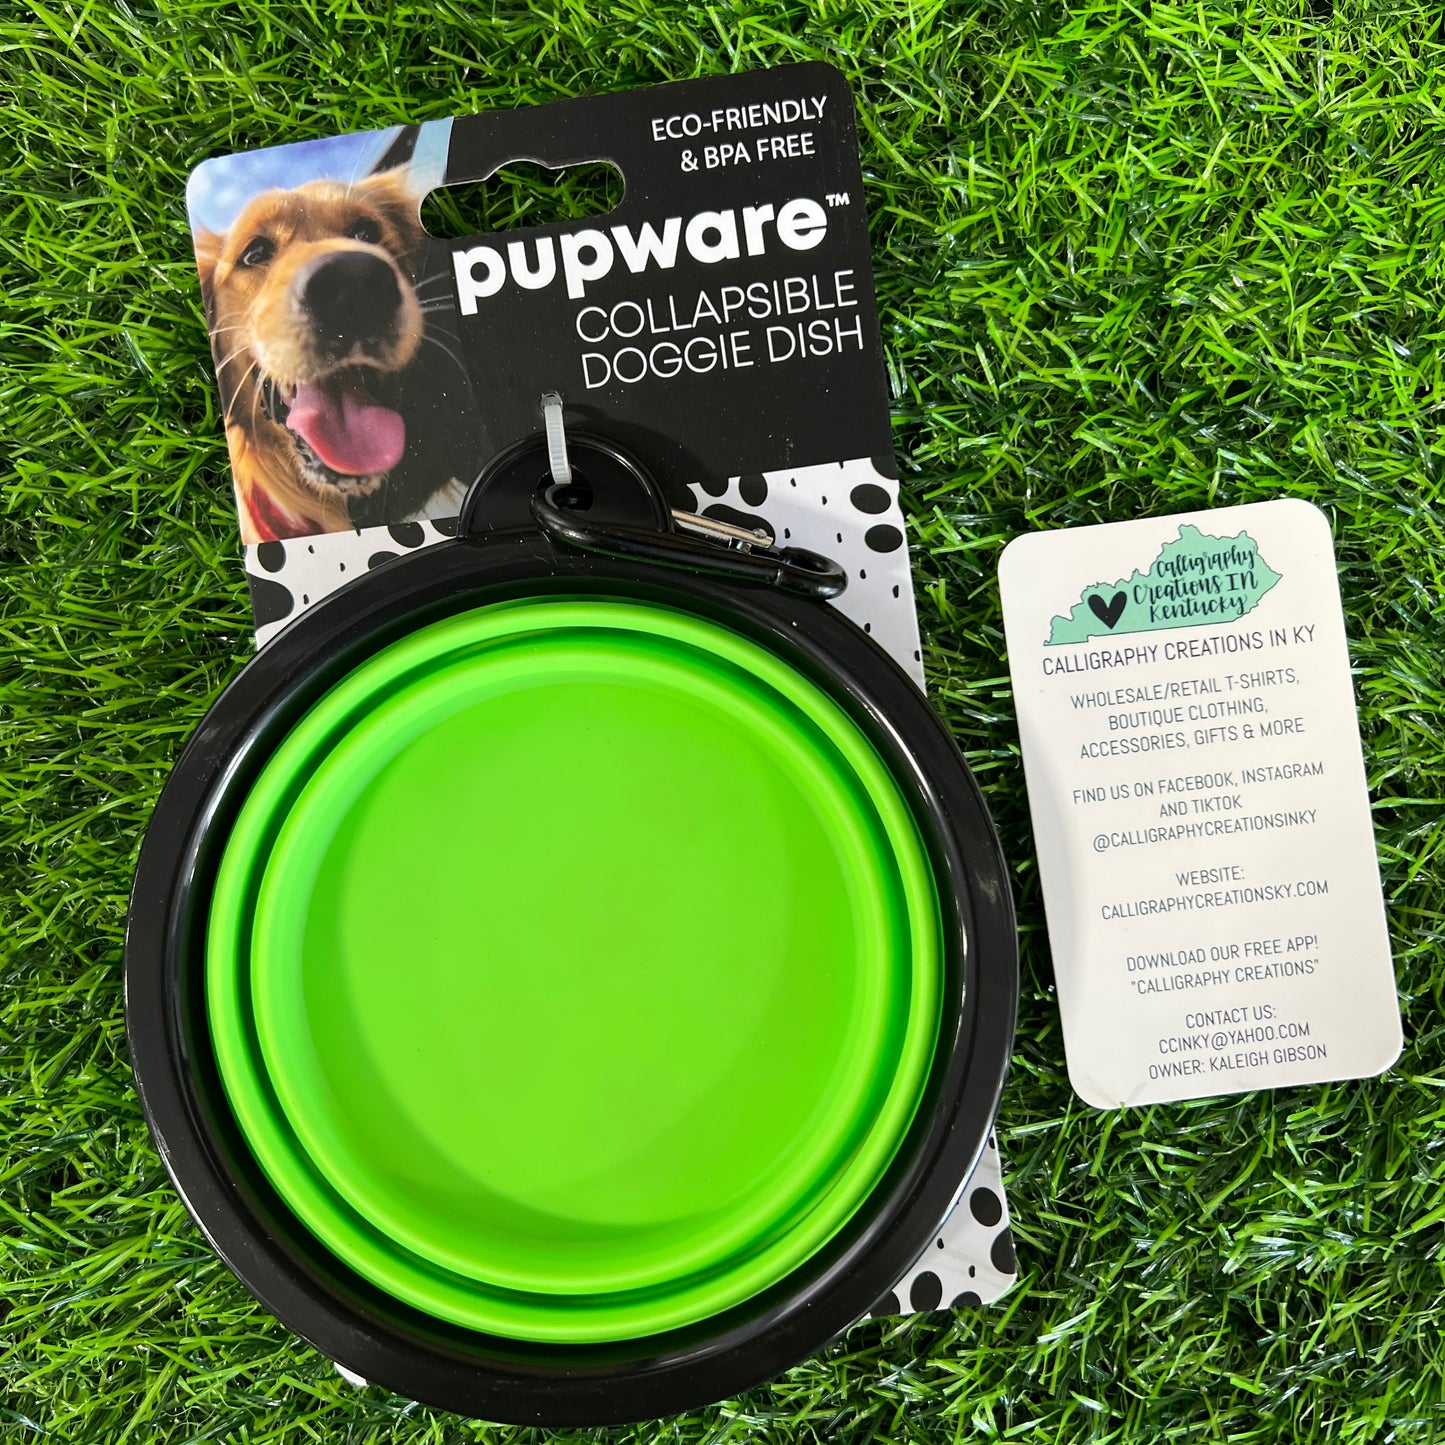 Pupware collapsible doggie dish-green